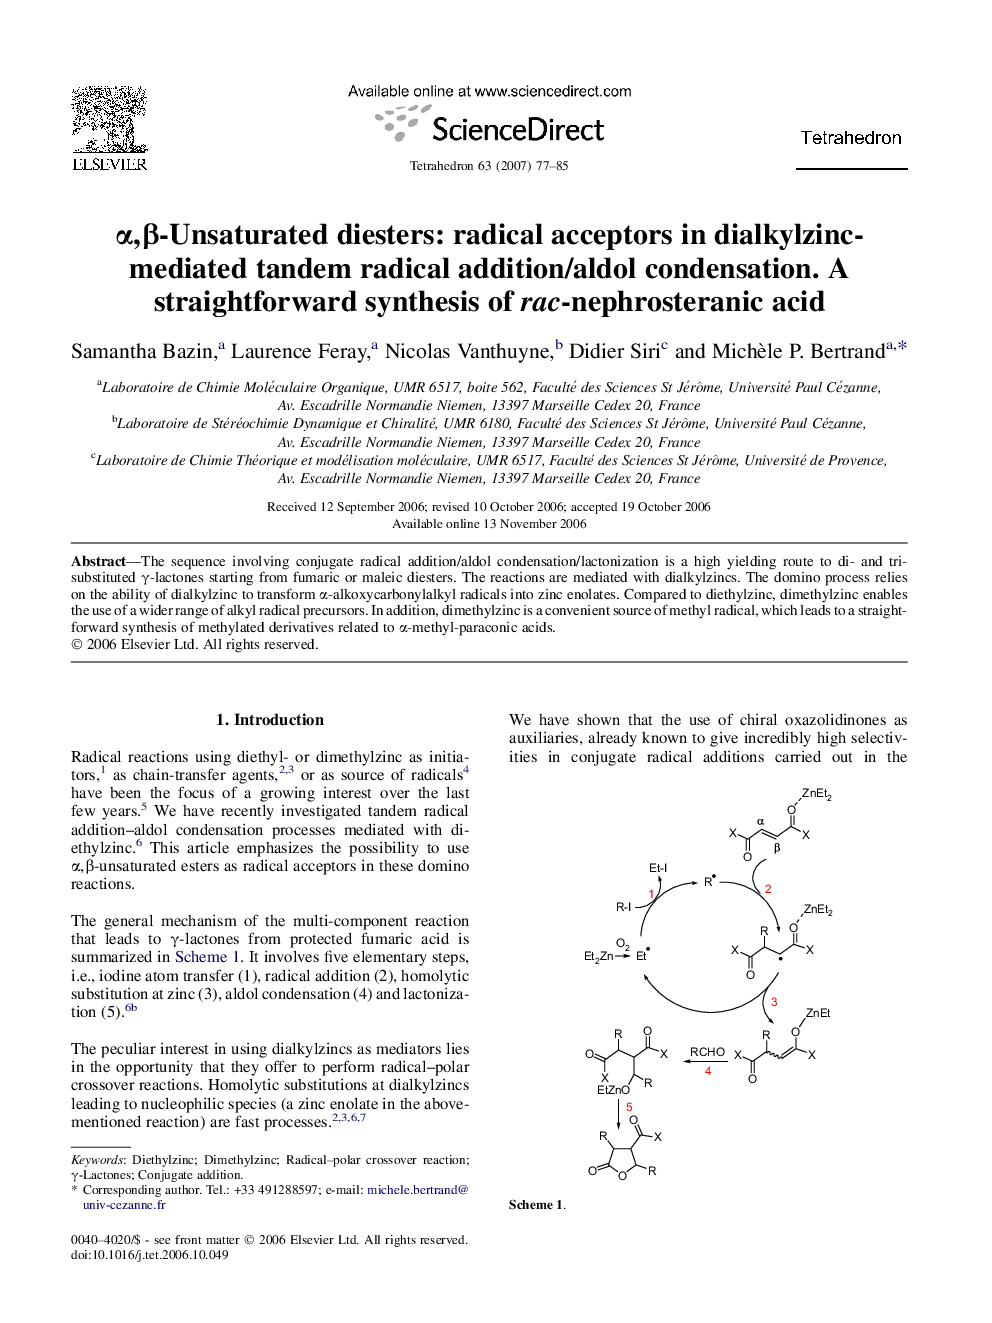 Î±,Î²-Unsaturated diesters: radical acceptors in dialkylzinc-mediated tandem radical addition/aldol condensation. A straightforward synthesis of rac-nephrosteranic acid